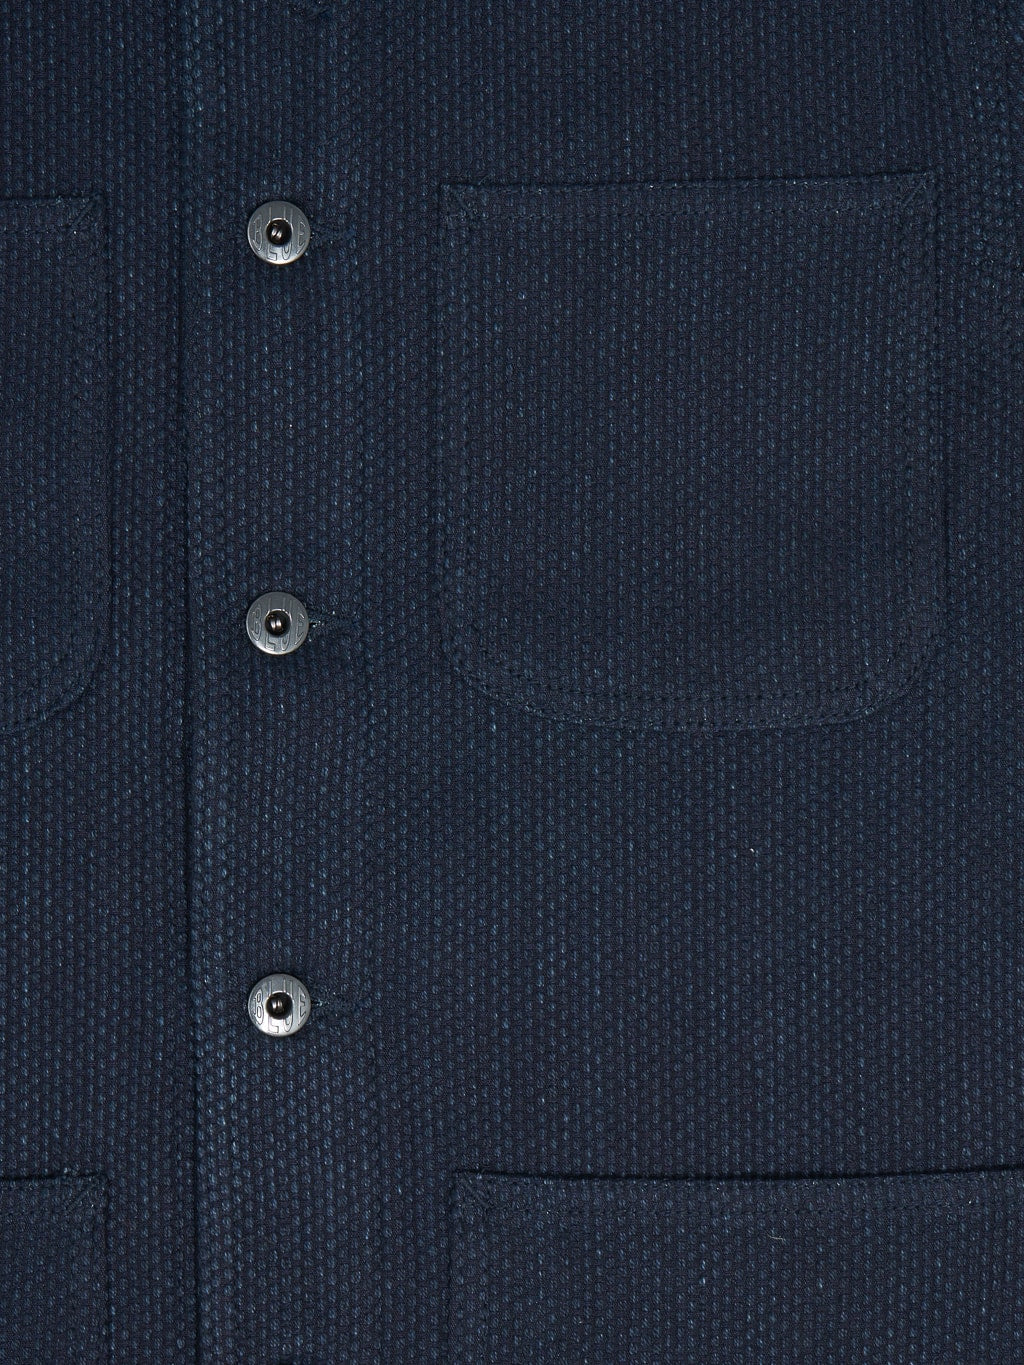 Japan Blue Indigo Sashiko Coverall buttons closeup